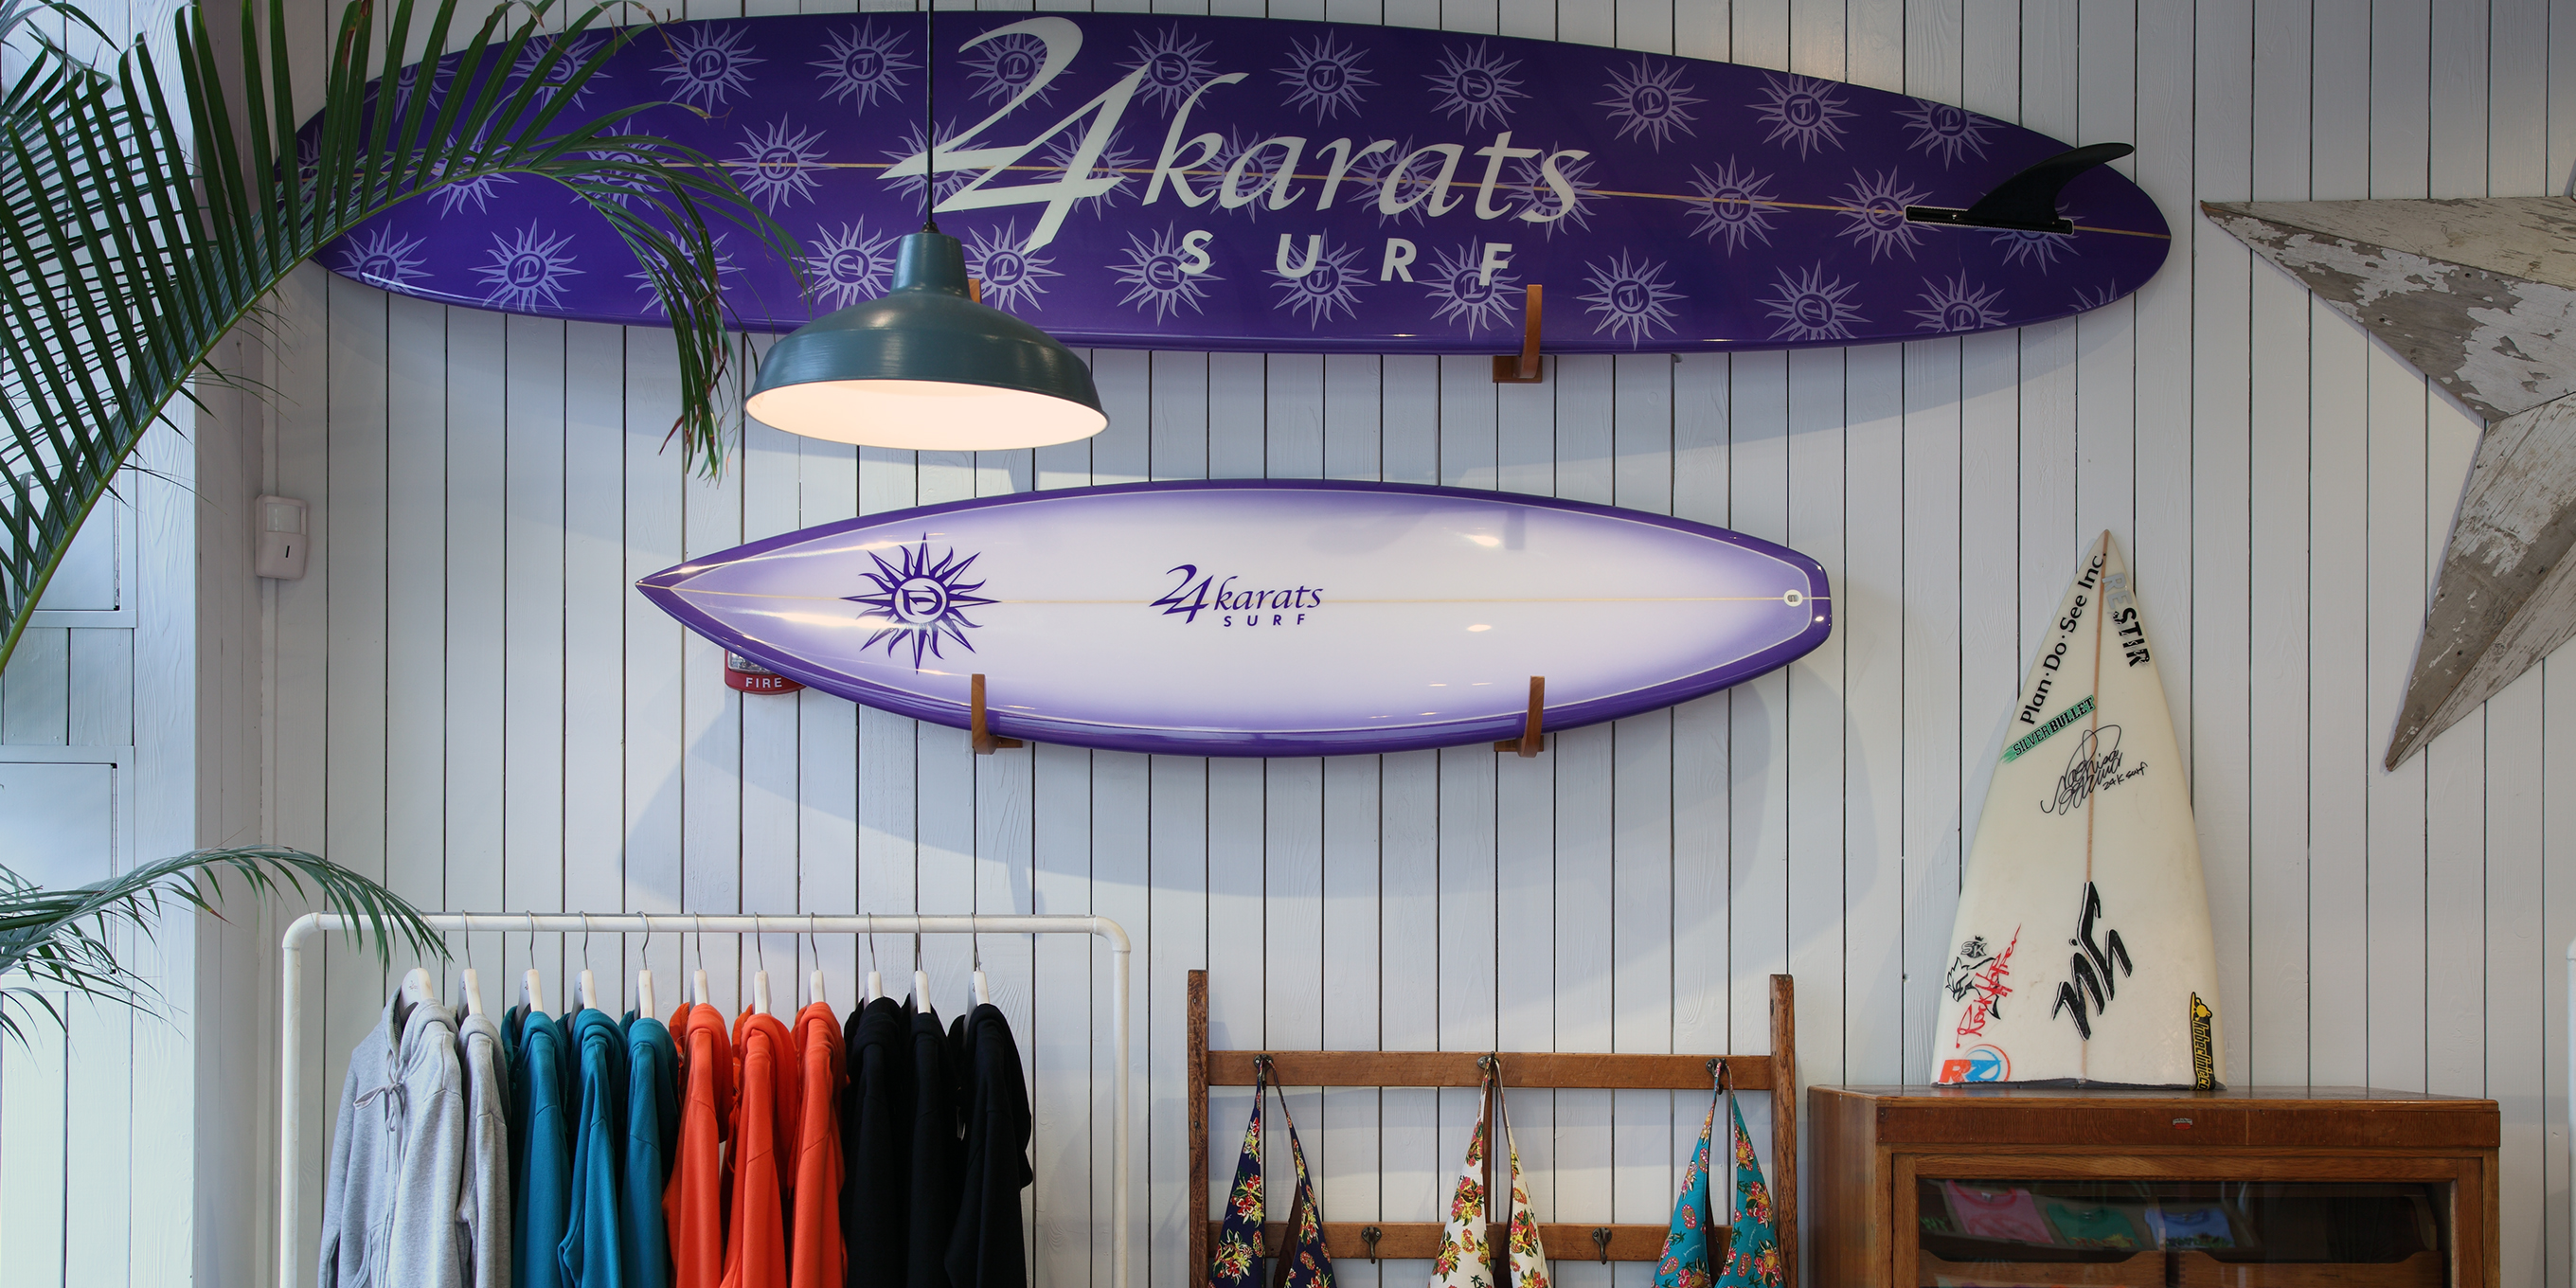 24karats Surf Honolulu Works Line Inc